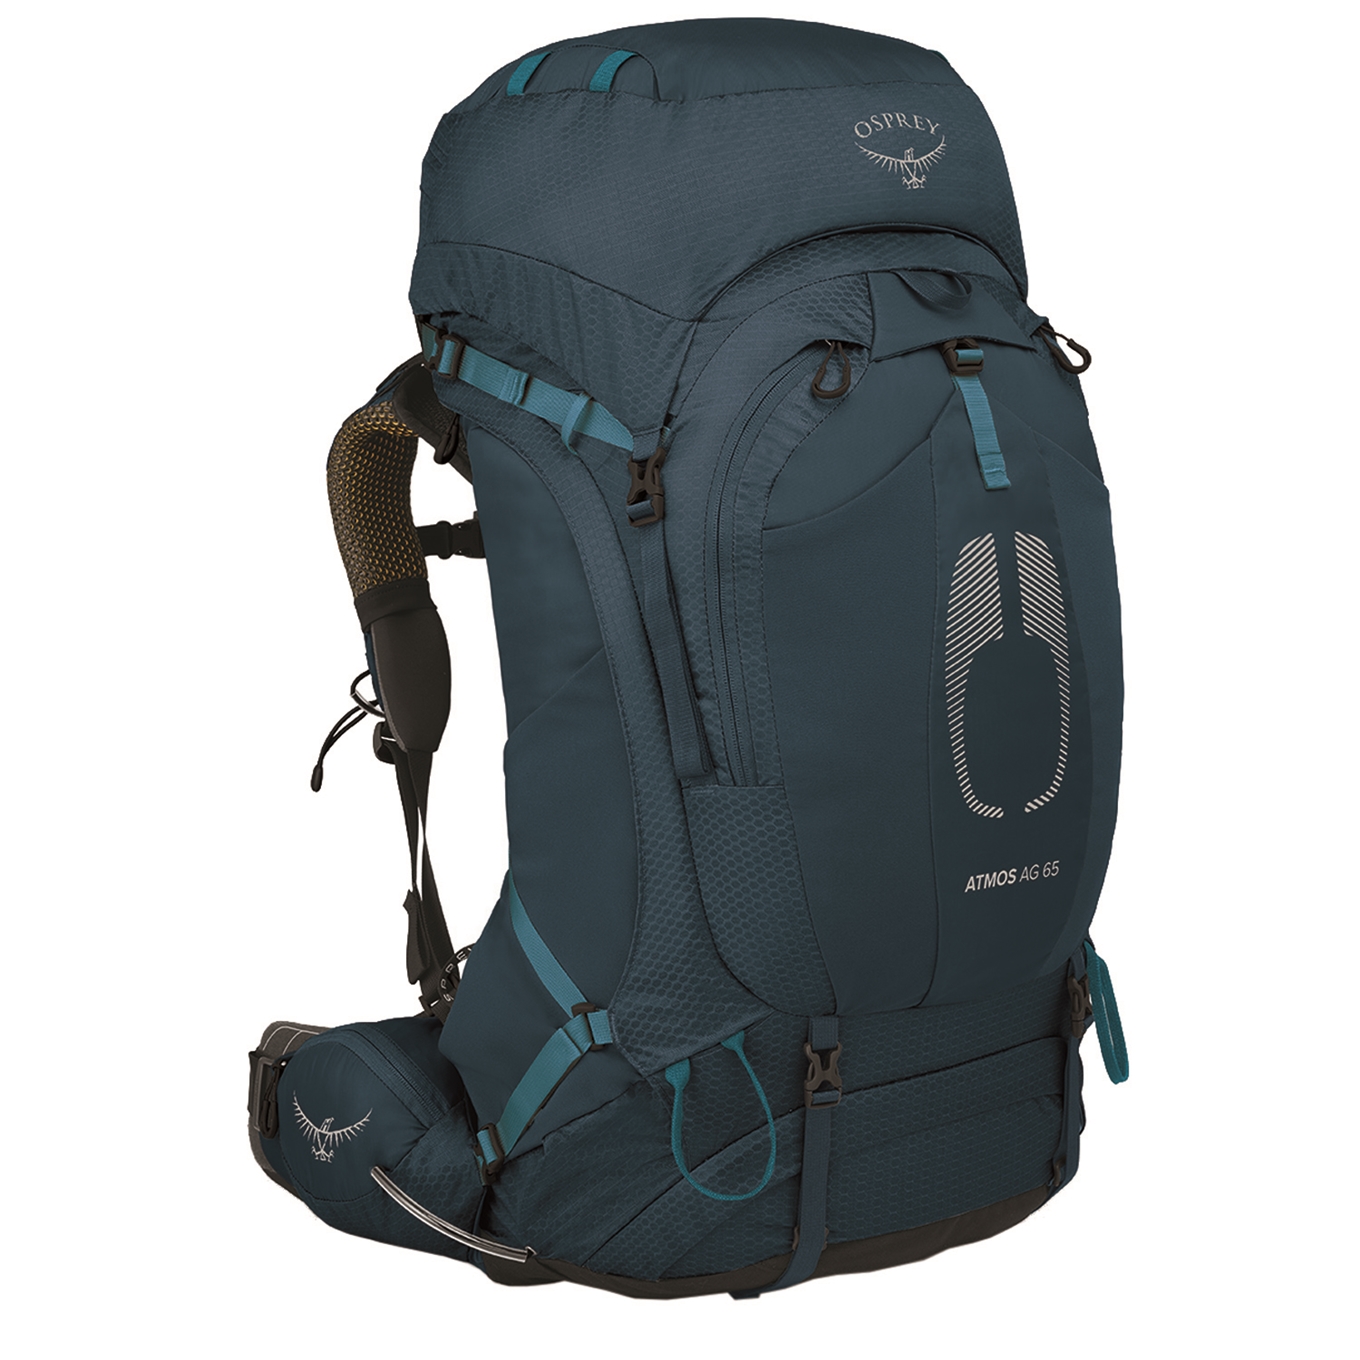 Osprey Atmos AG 65 L/XL venturi blue backpack